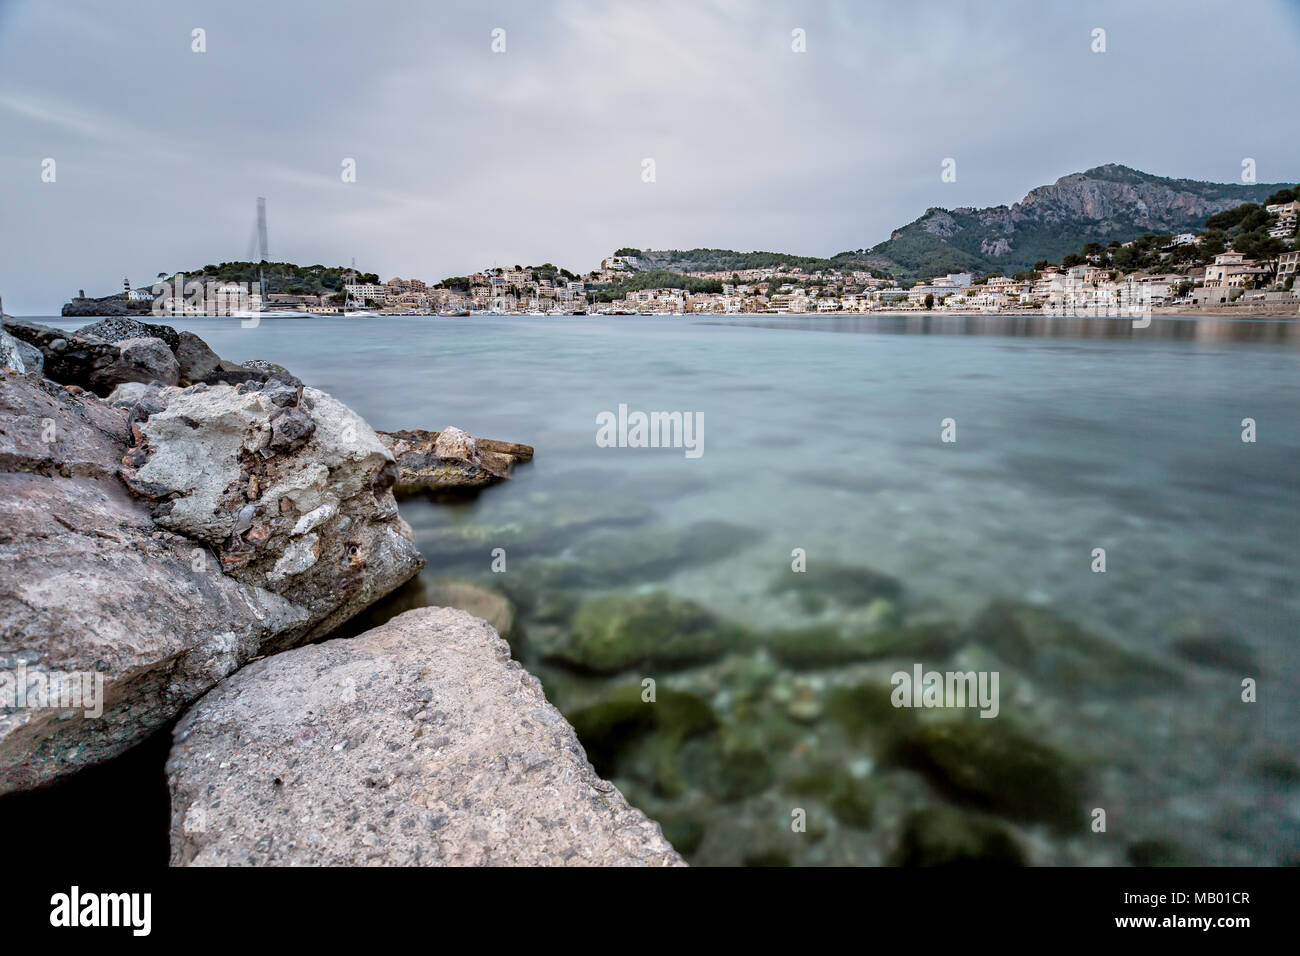 Harbor of Port de Soller in Mallorca Stock Photo